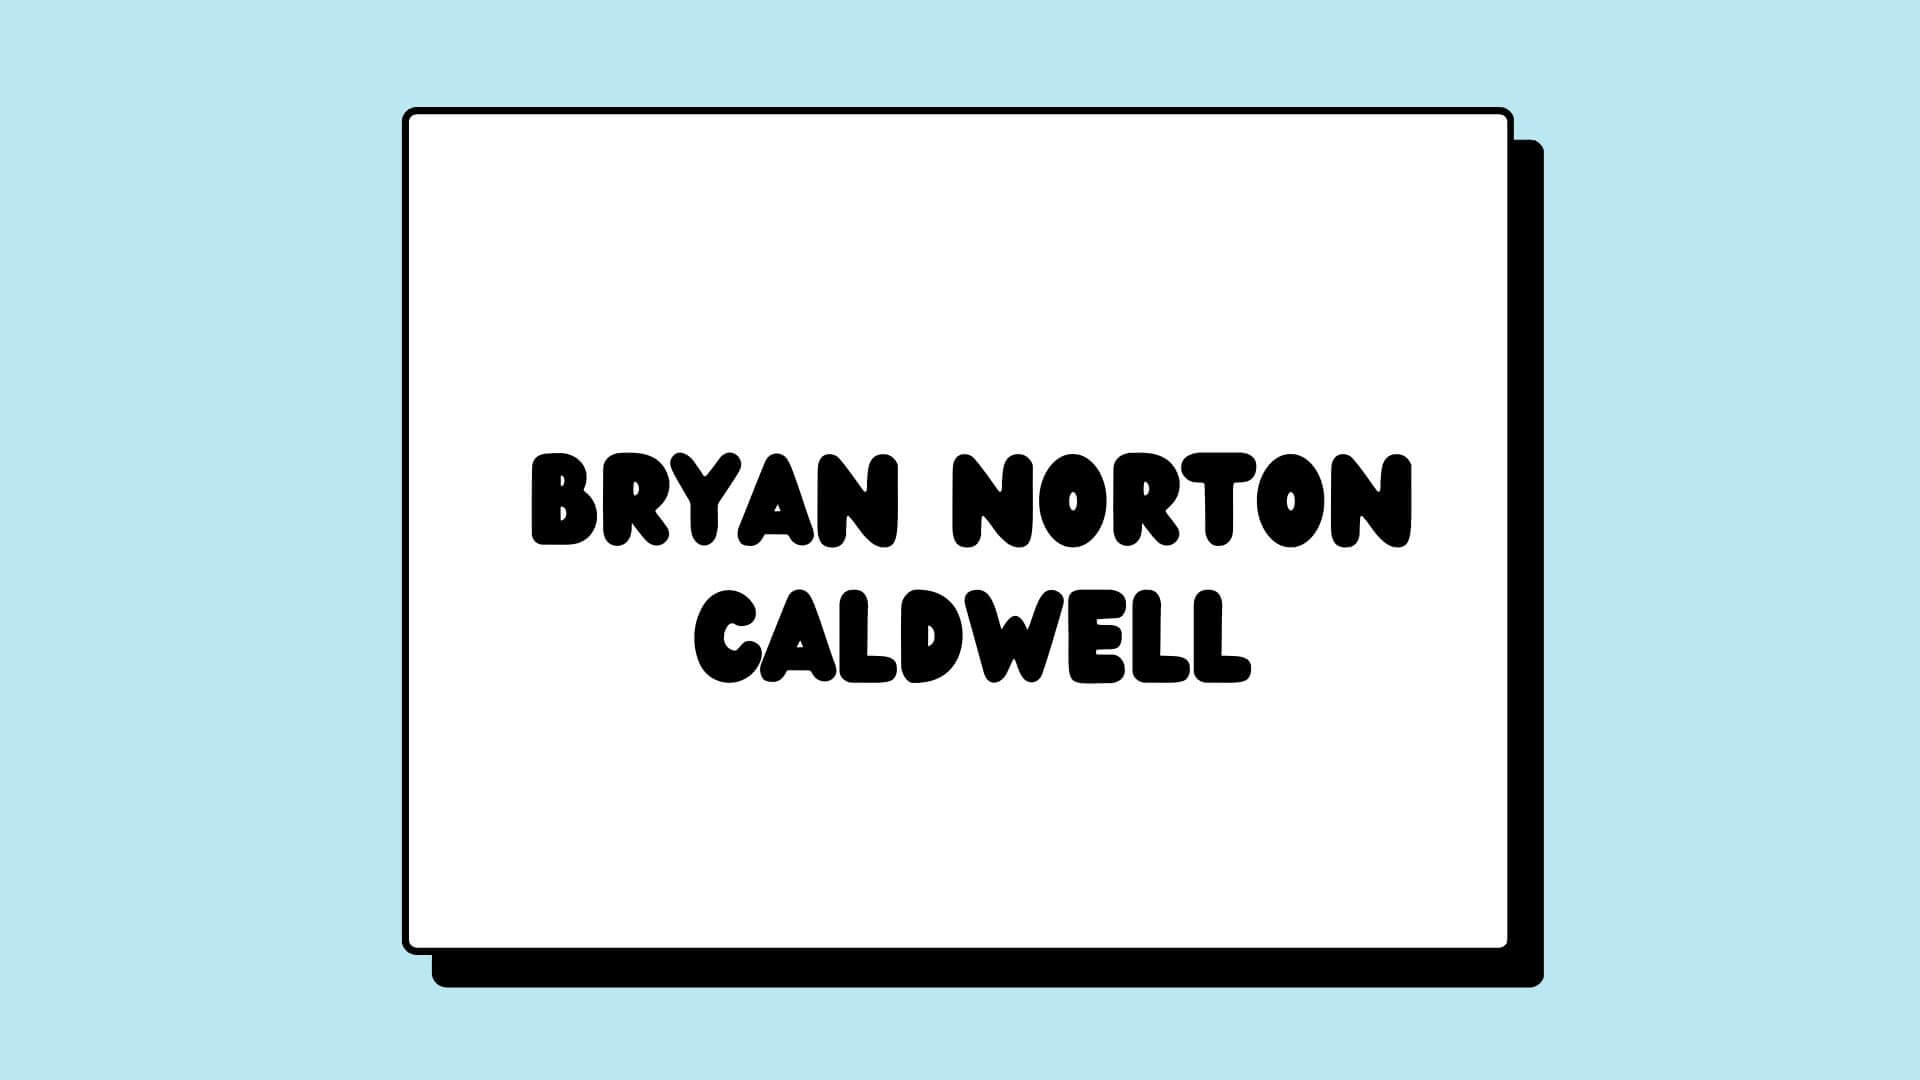 Bryan Norton Caldwell